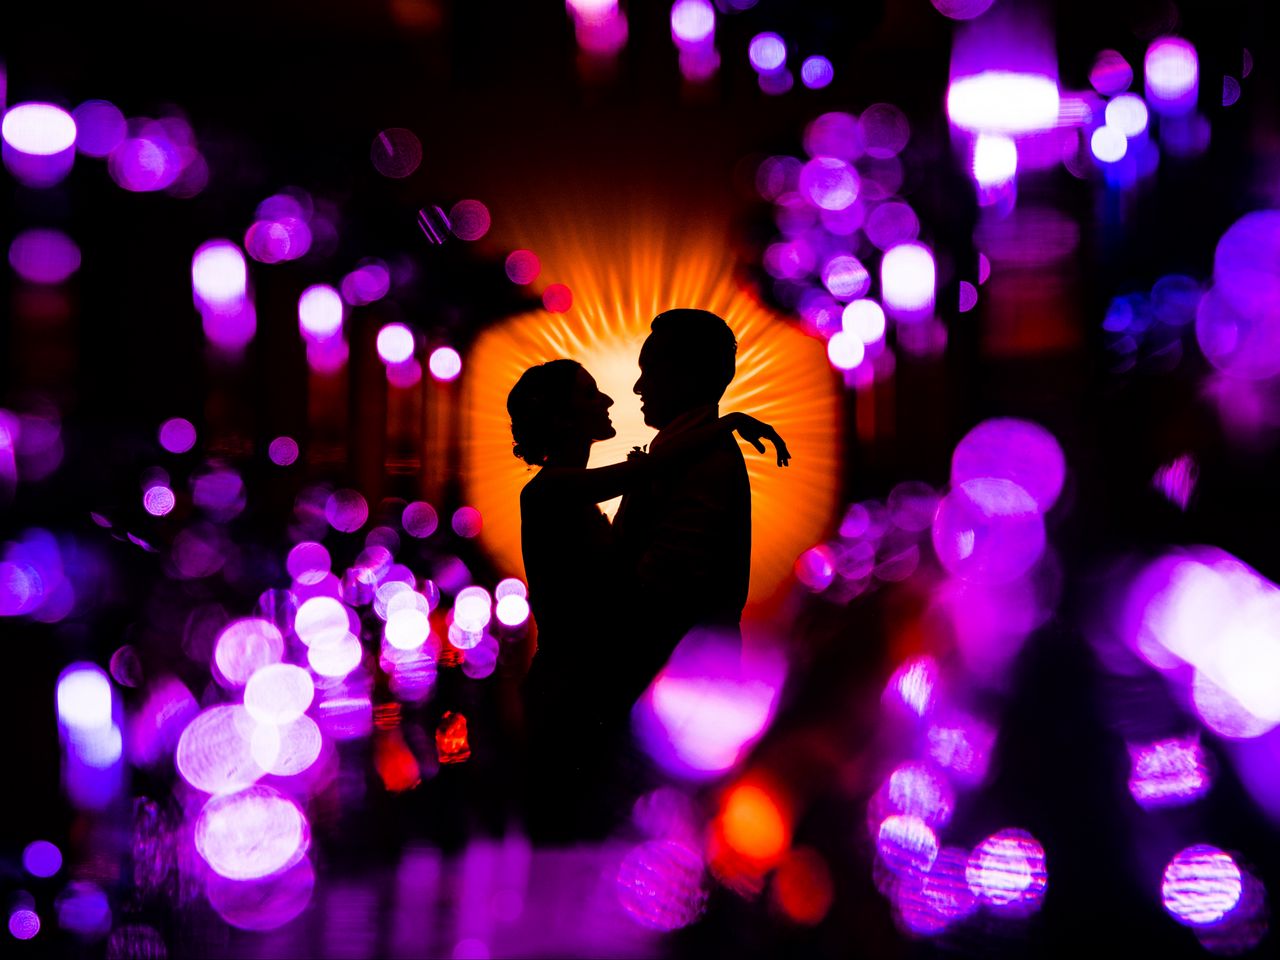 Download wallpaper 1280x960 couple, lovers, hugs, hugging, romance, love,  shiny, glamor standard 4:3 hd background